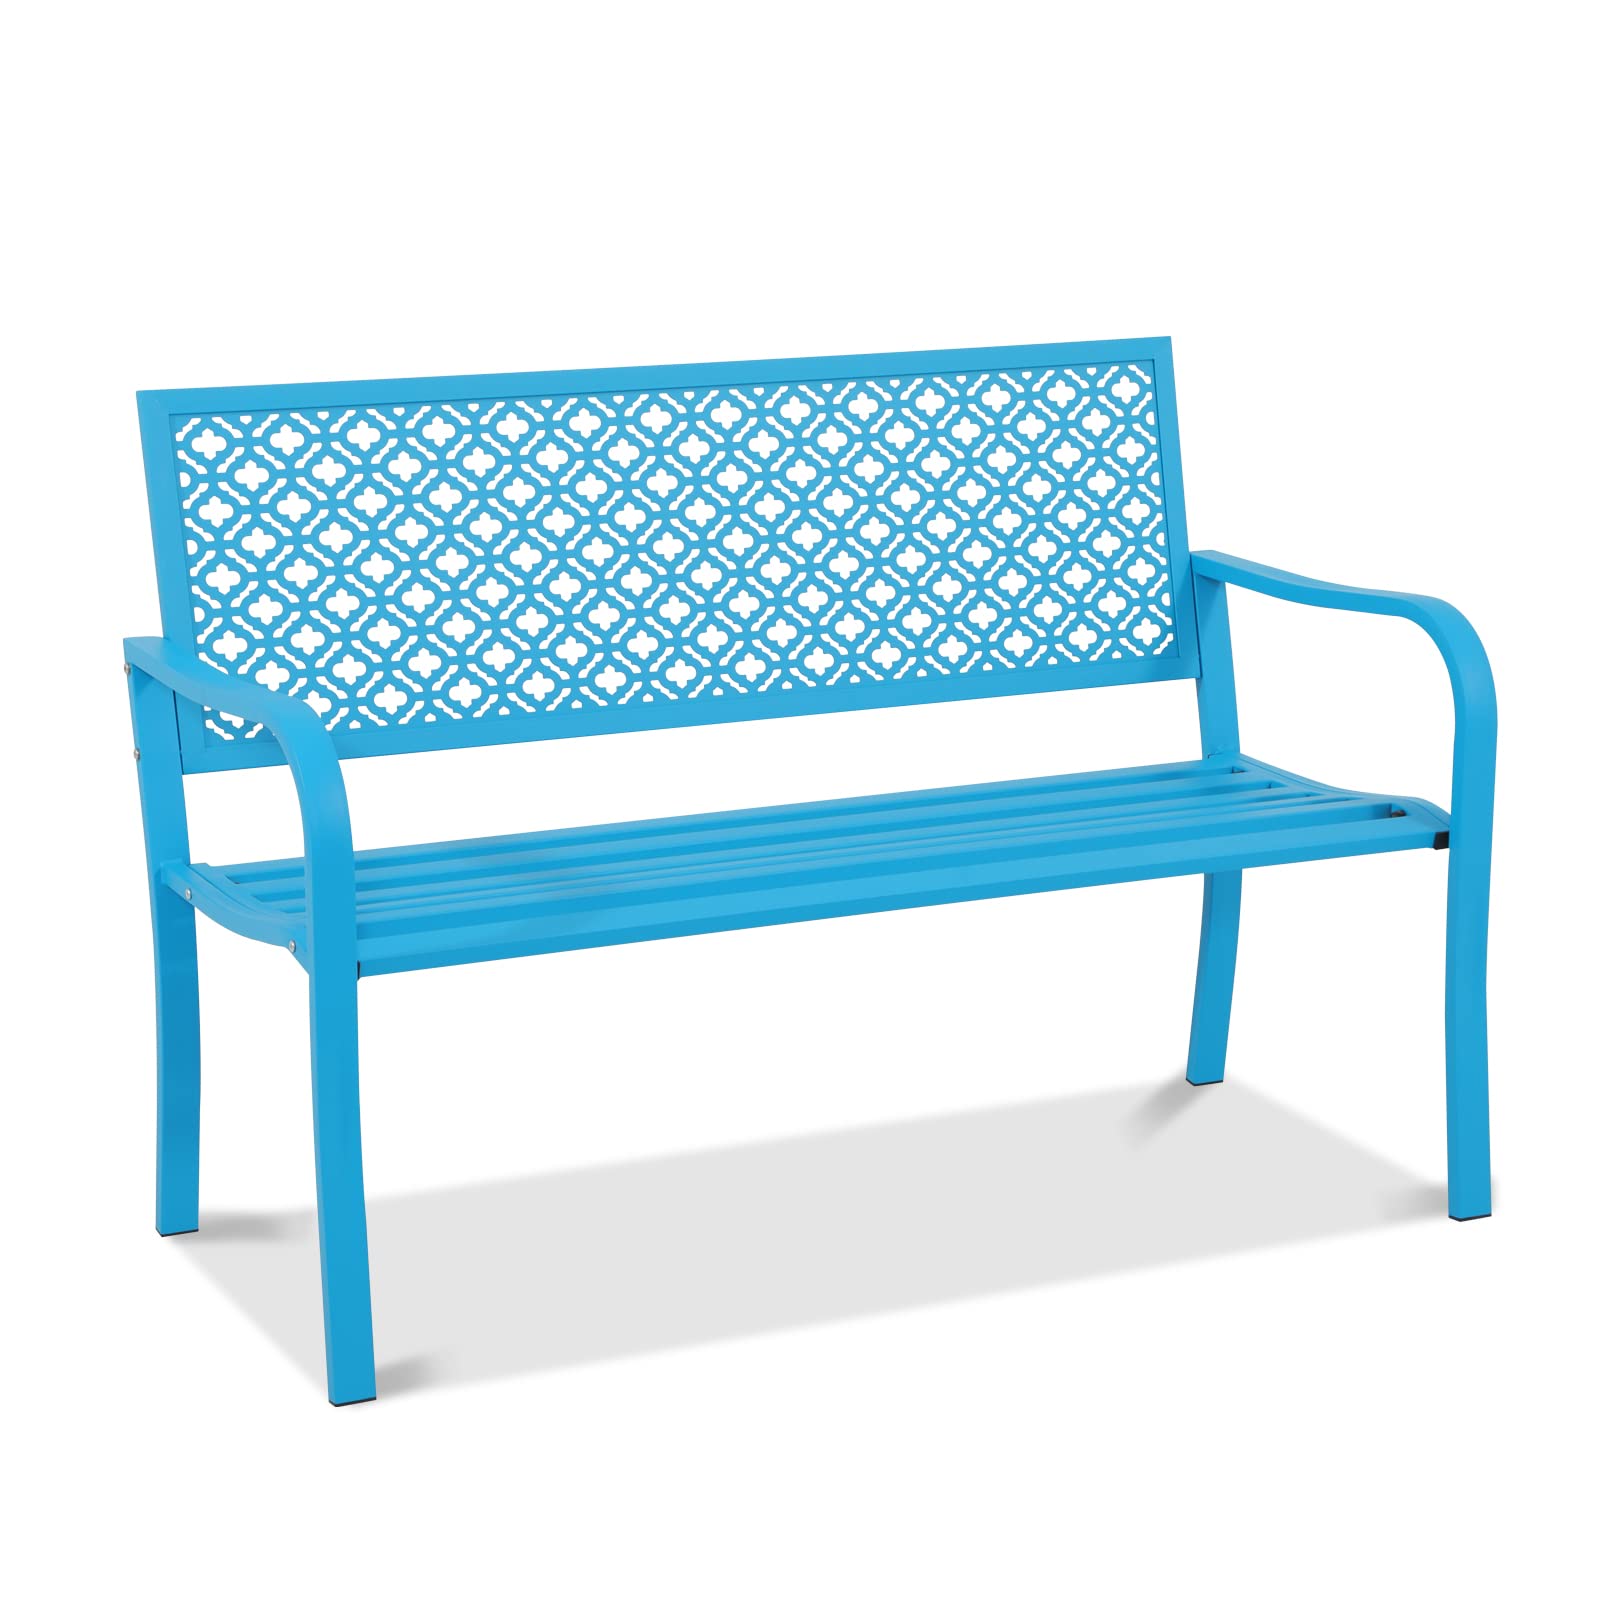 Aluminum Outdoor Garden Bench Patio Porch Chair Furniture, Blue&Black